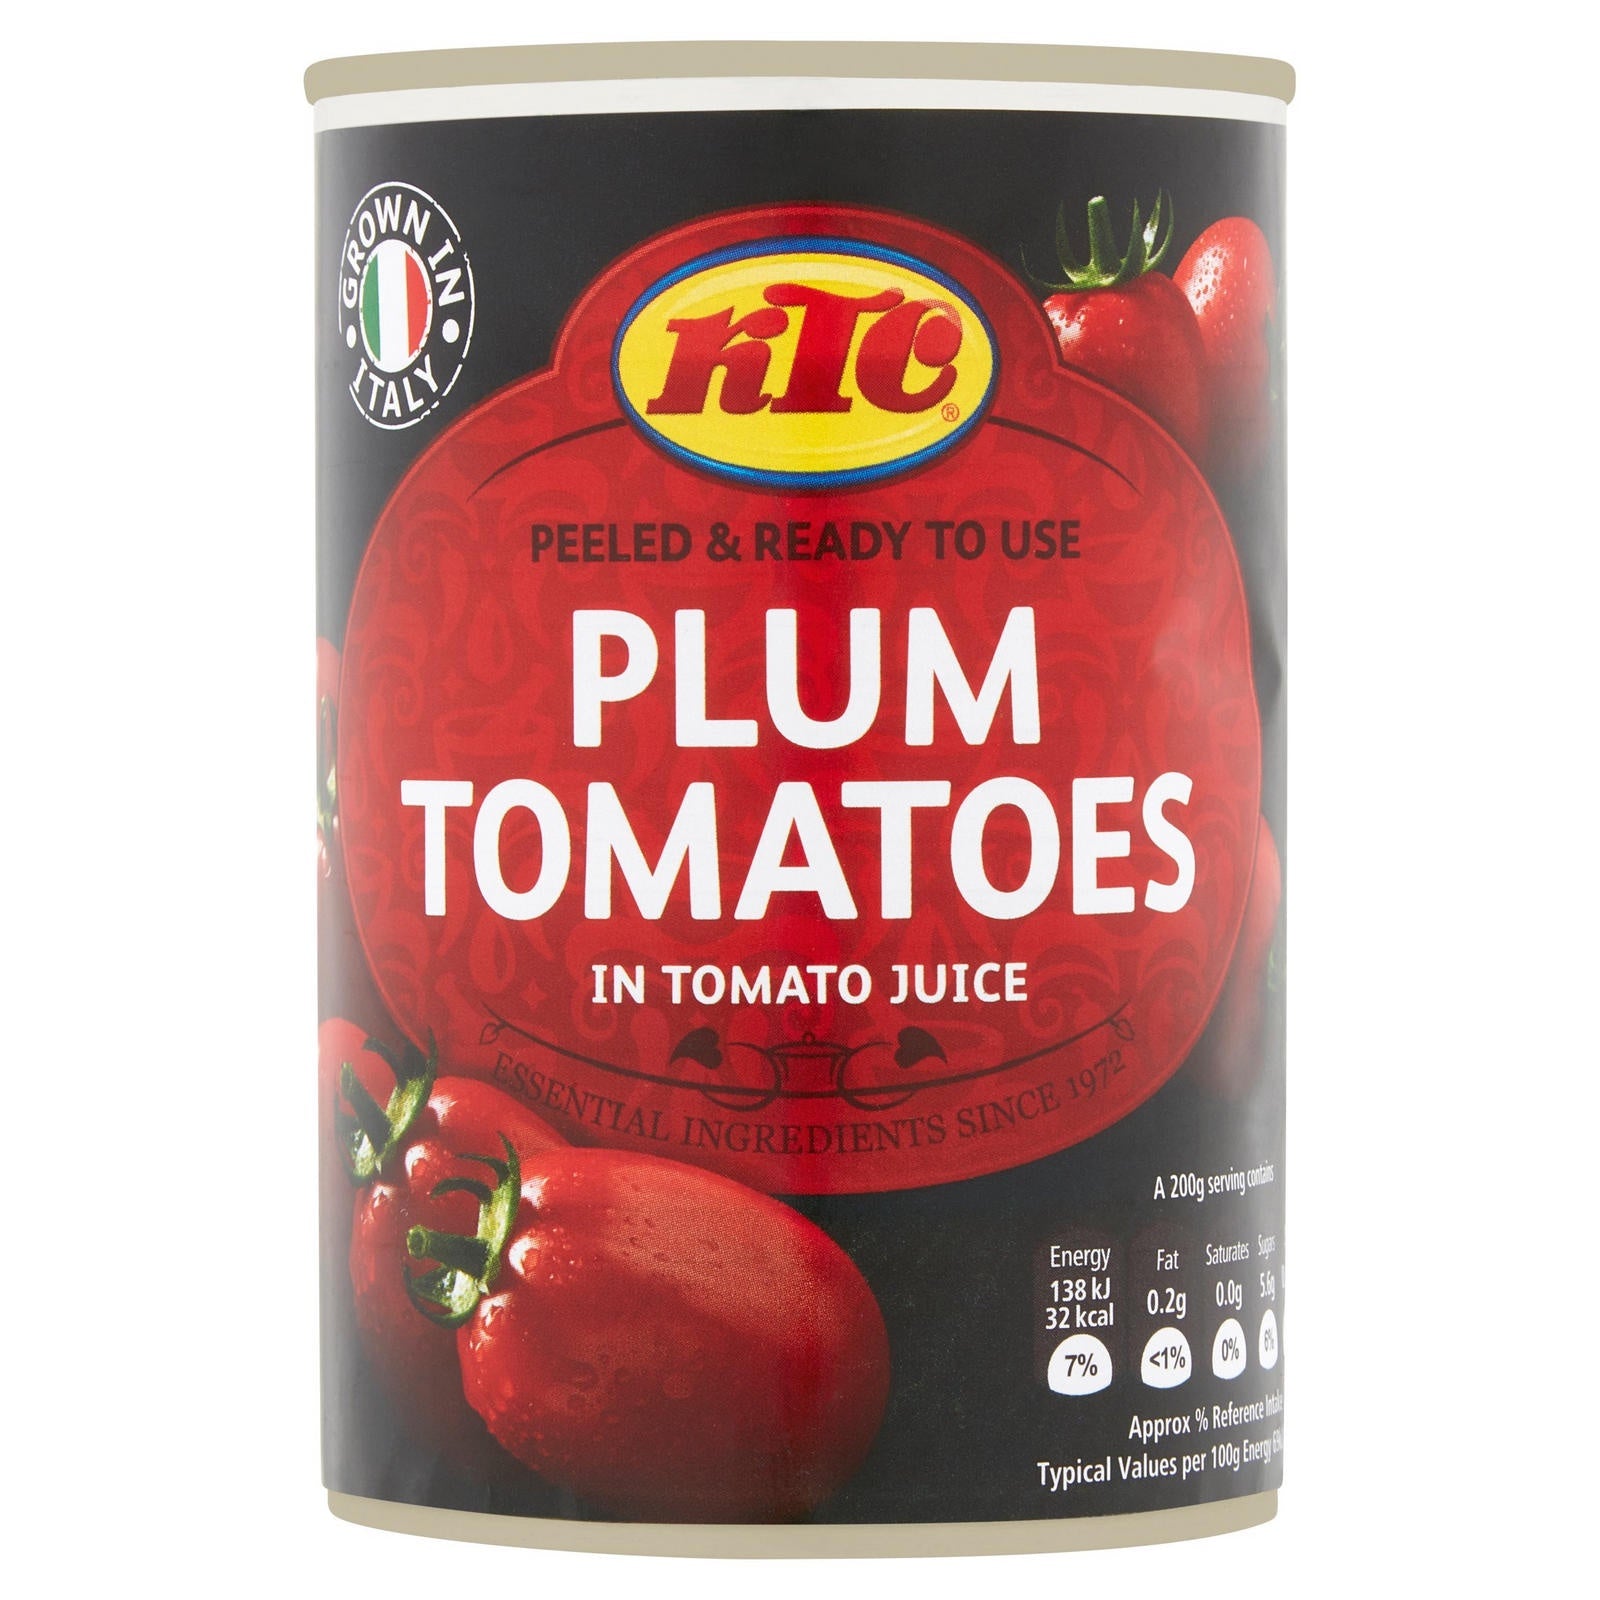 KTC Peeled Plum Tomatoes in Tomato Juice (400g)